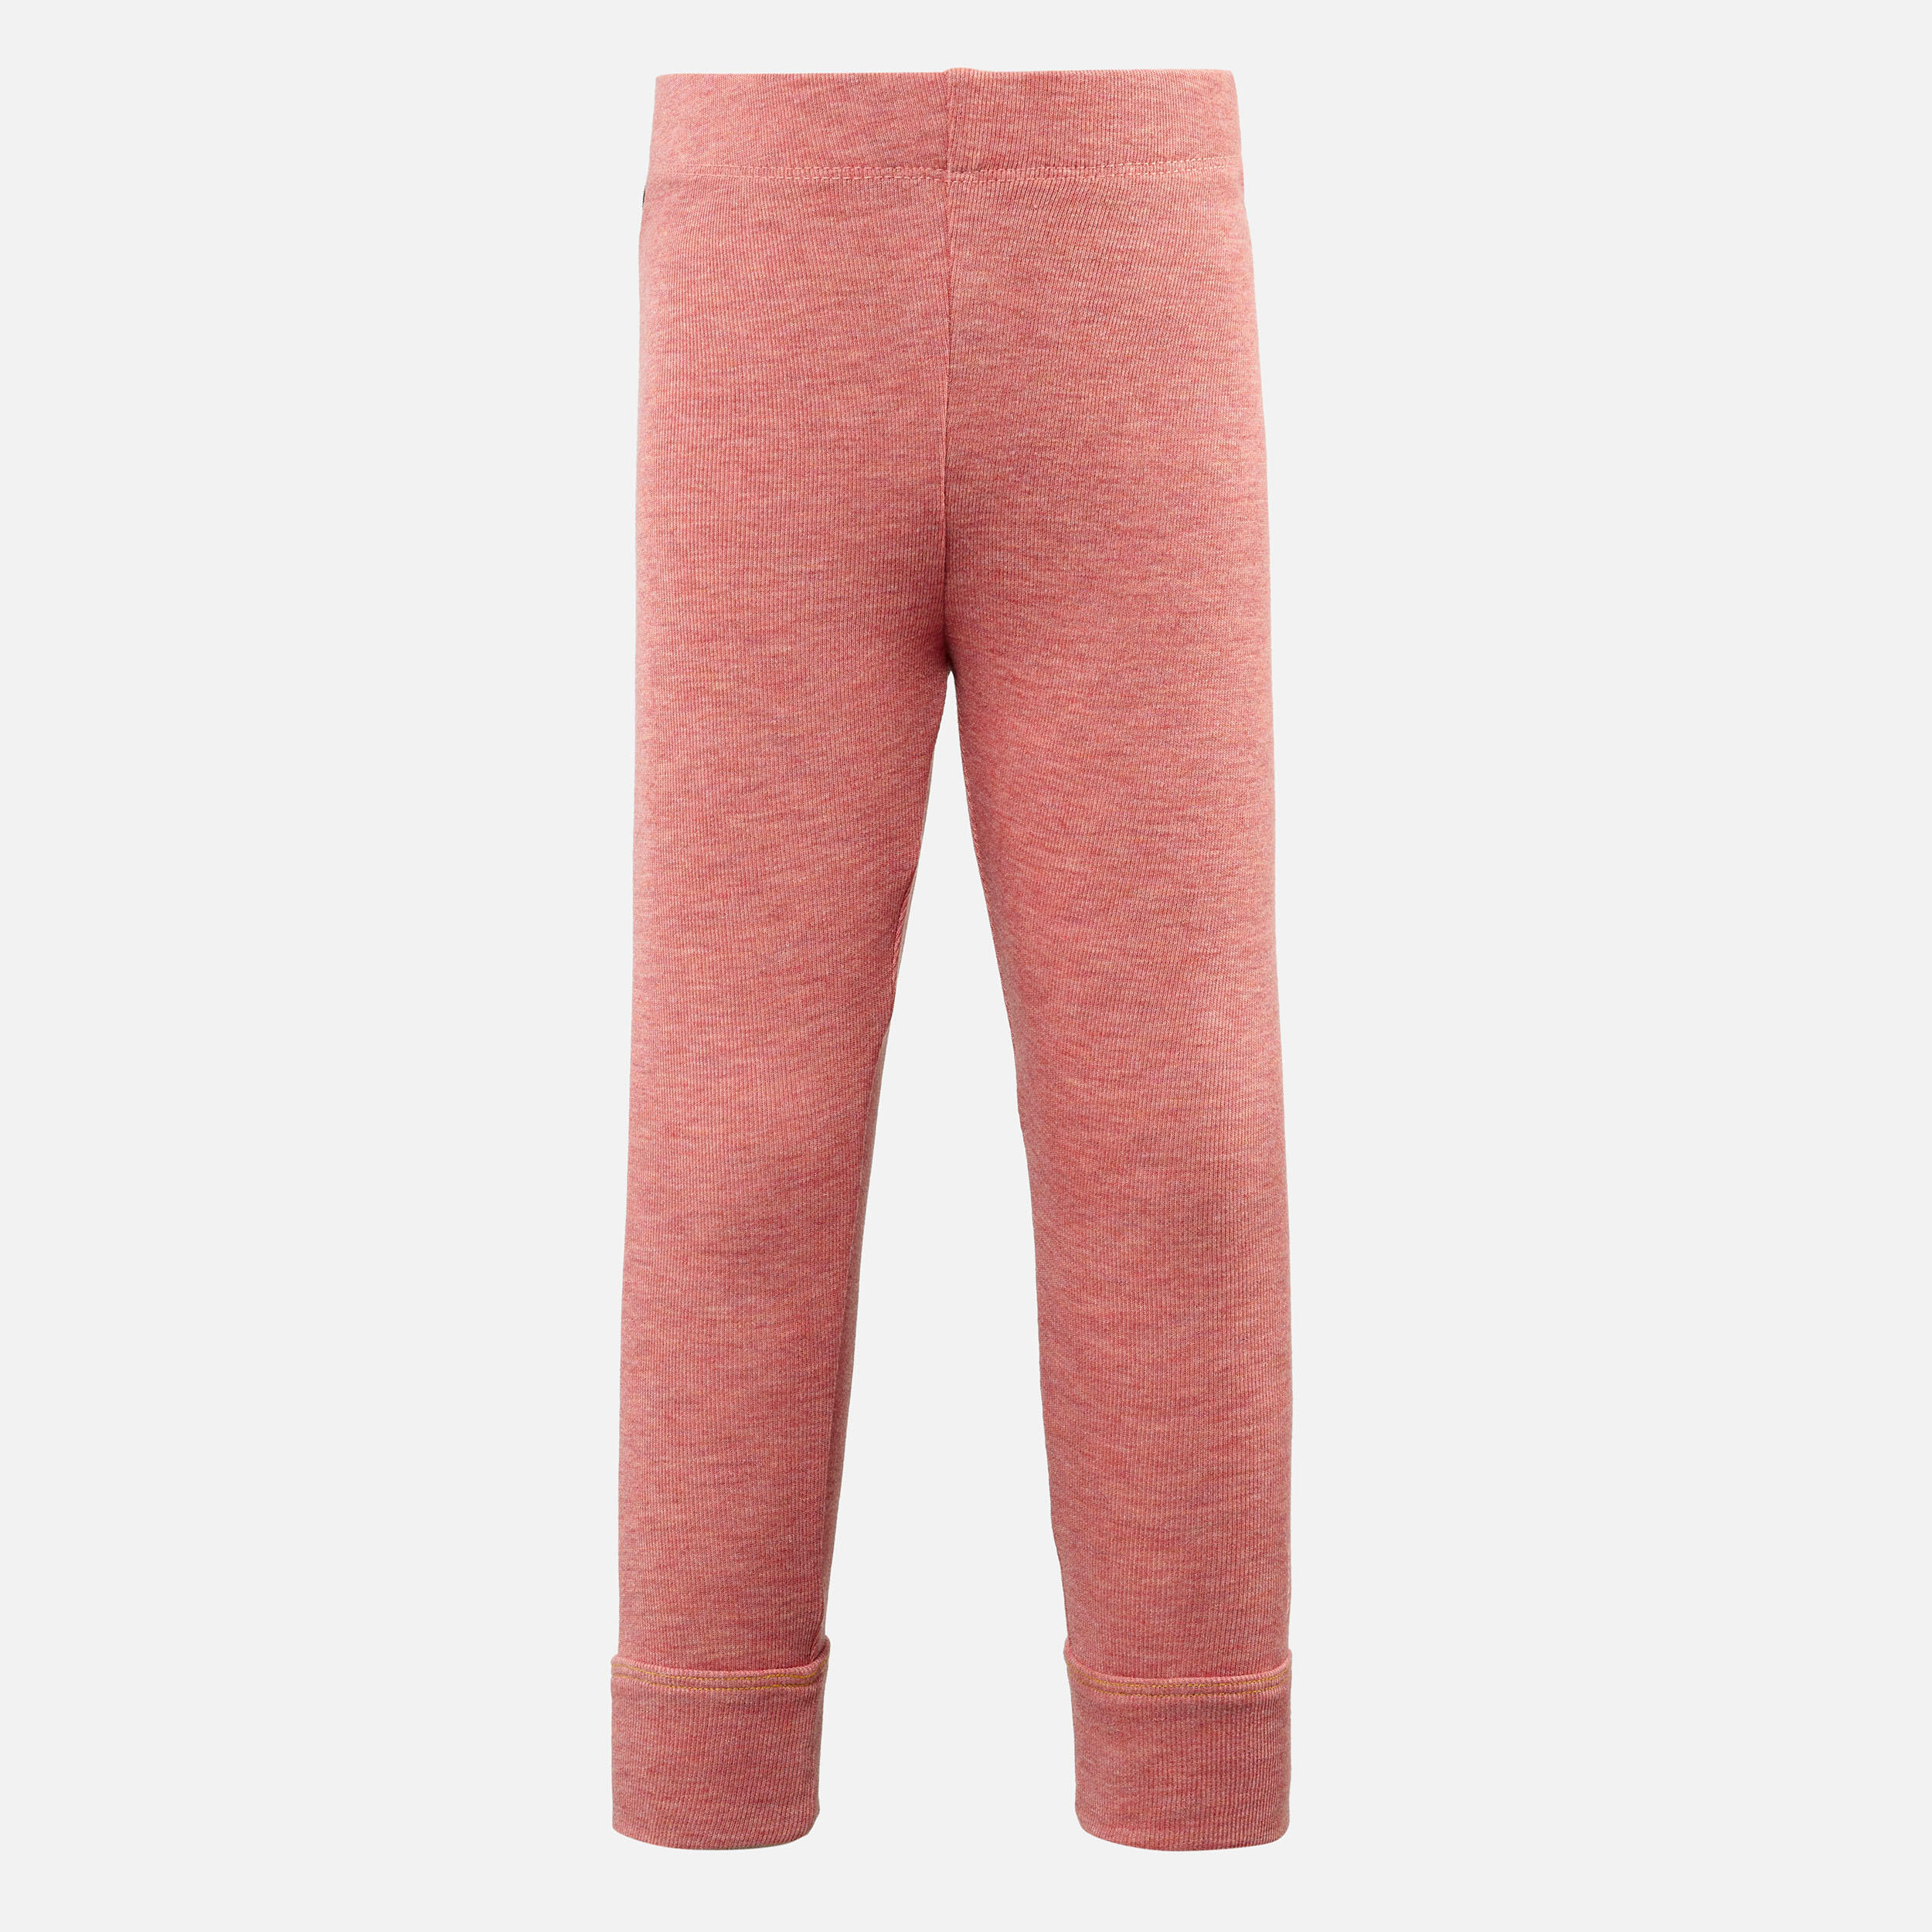 Base layer trousers, Baby ski leggings - WARM pink 2/7